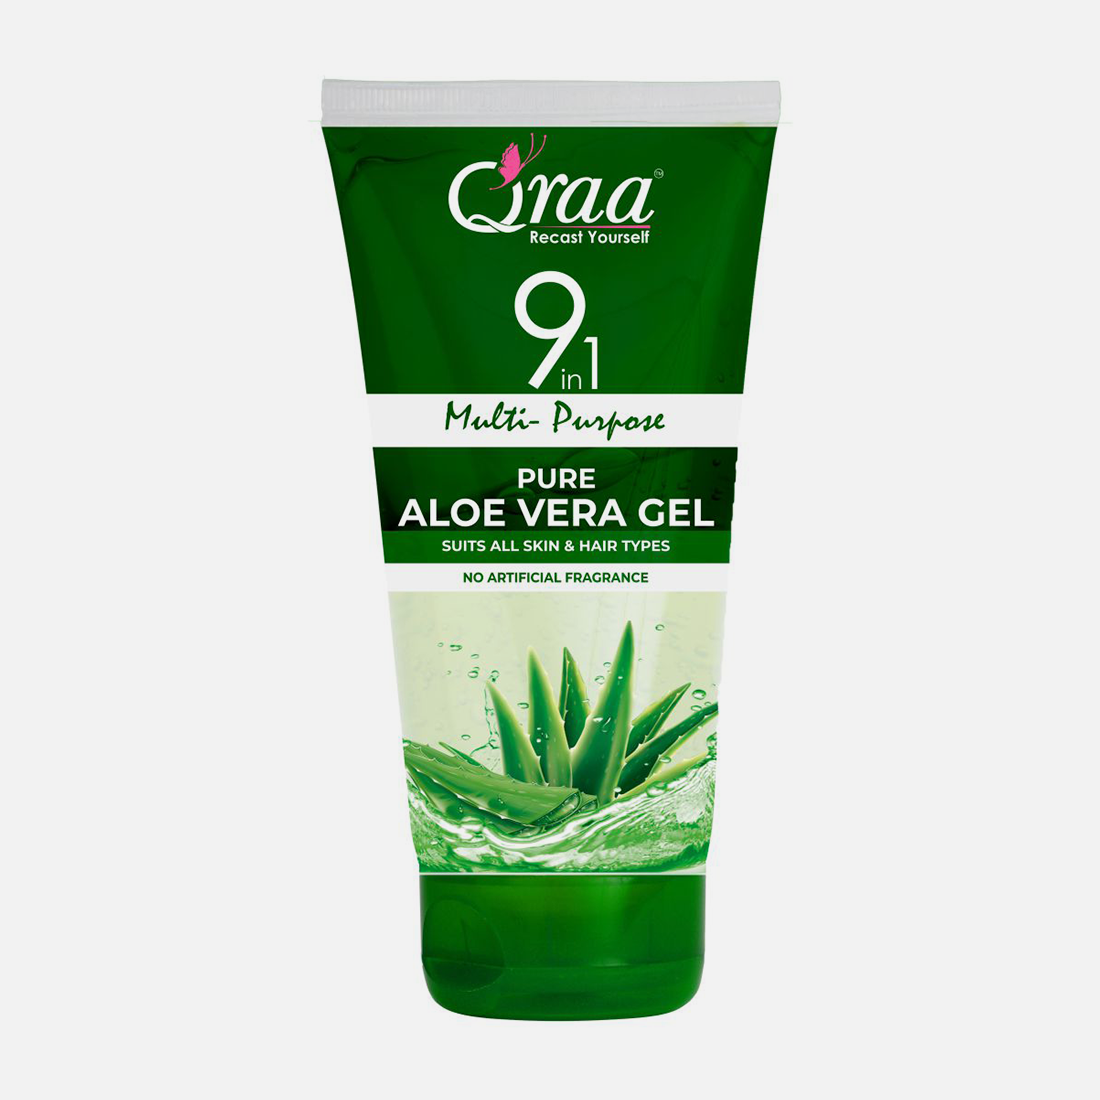 9 in 1 Multi-Purpose Aloe Vera Gel